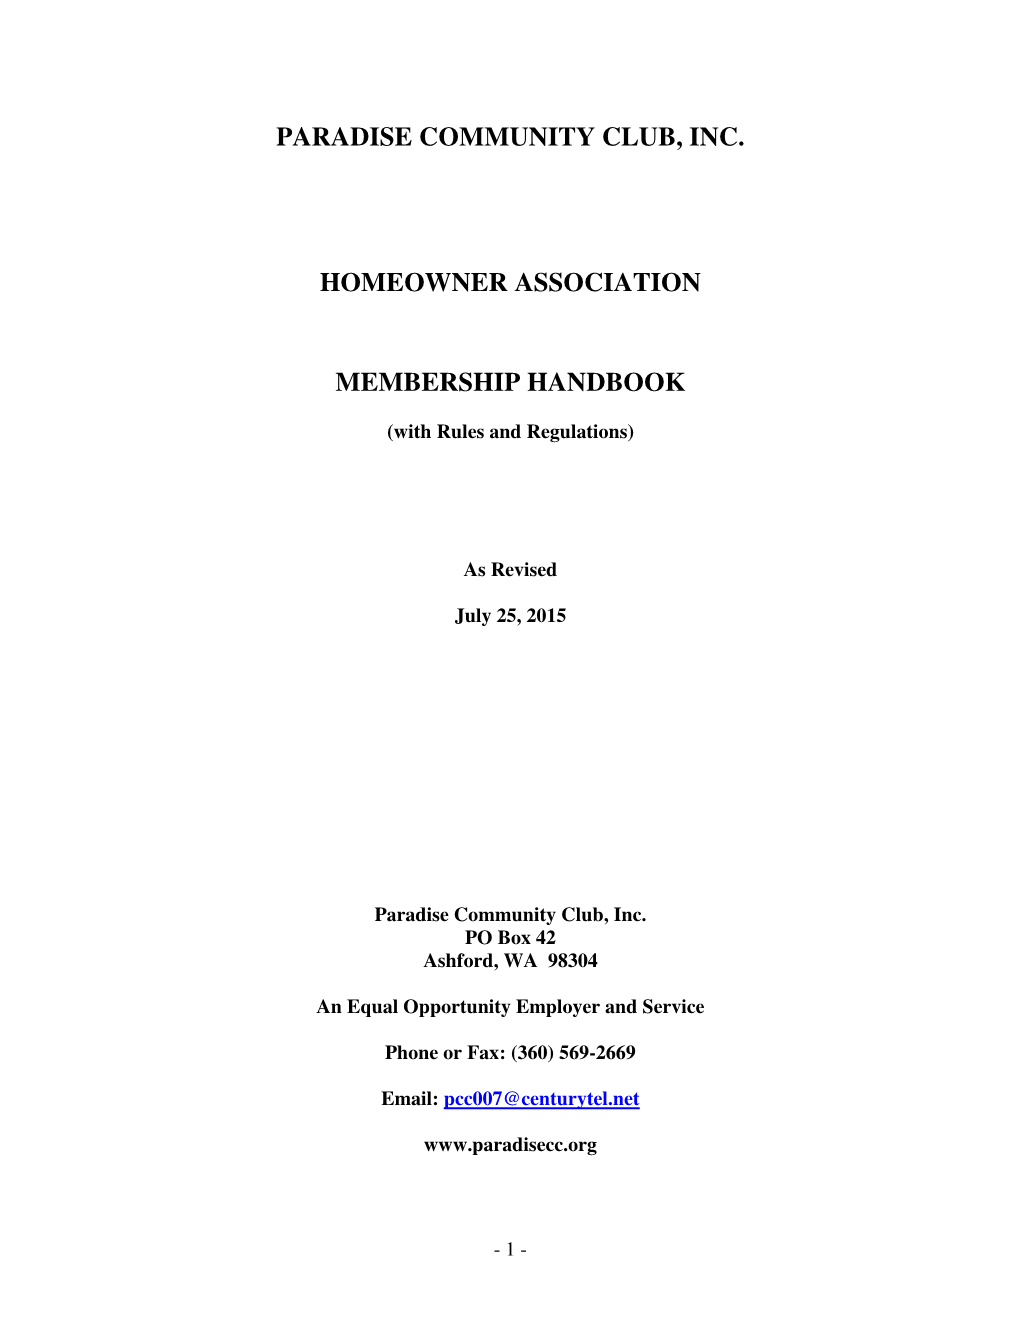 Paradise Community Club, Inc. Homeowner Association Membership Handbook